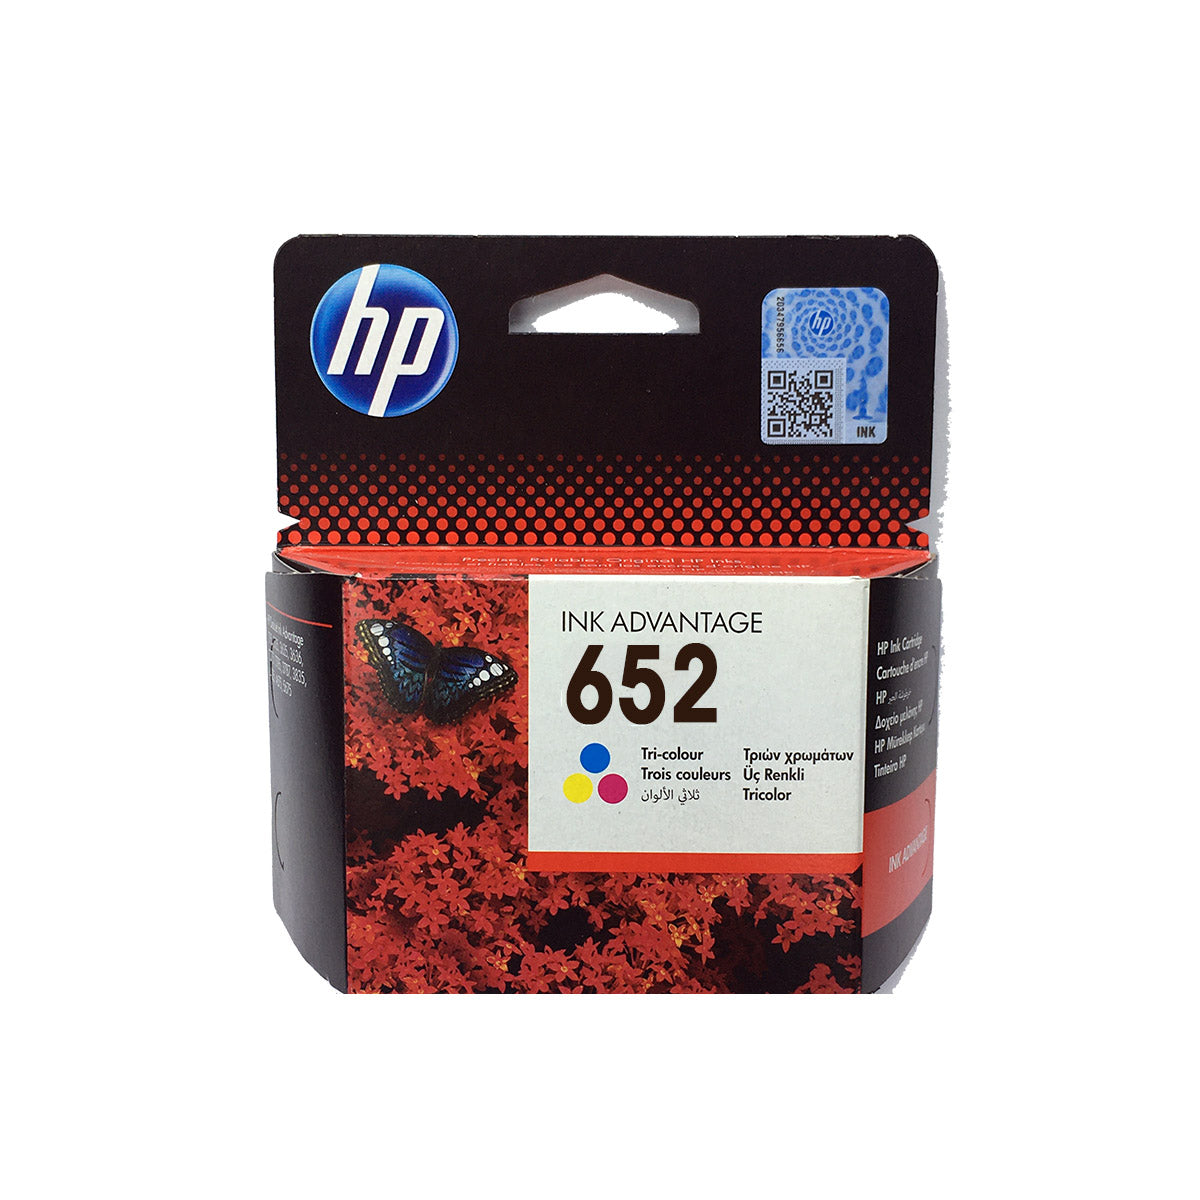 Shop HP 652C Tri Color Ink Advantage Cartridge online in Abu Dhabi, UAE